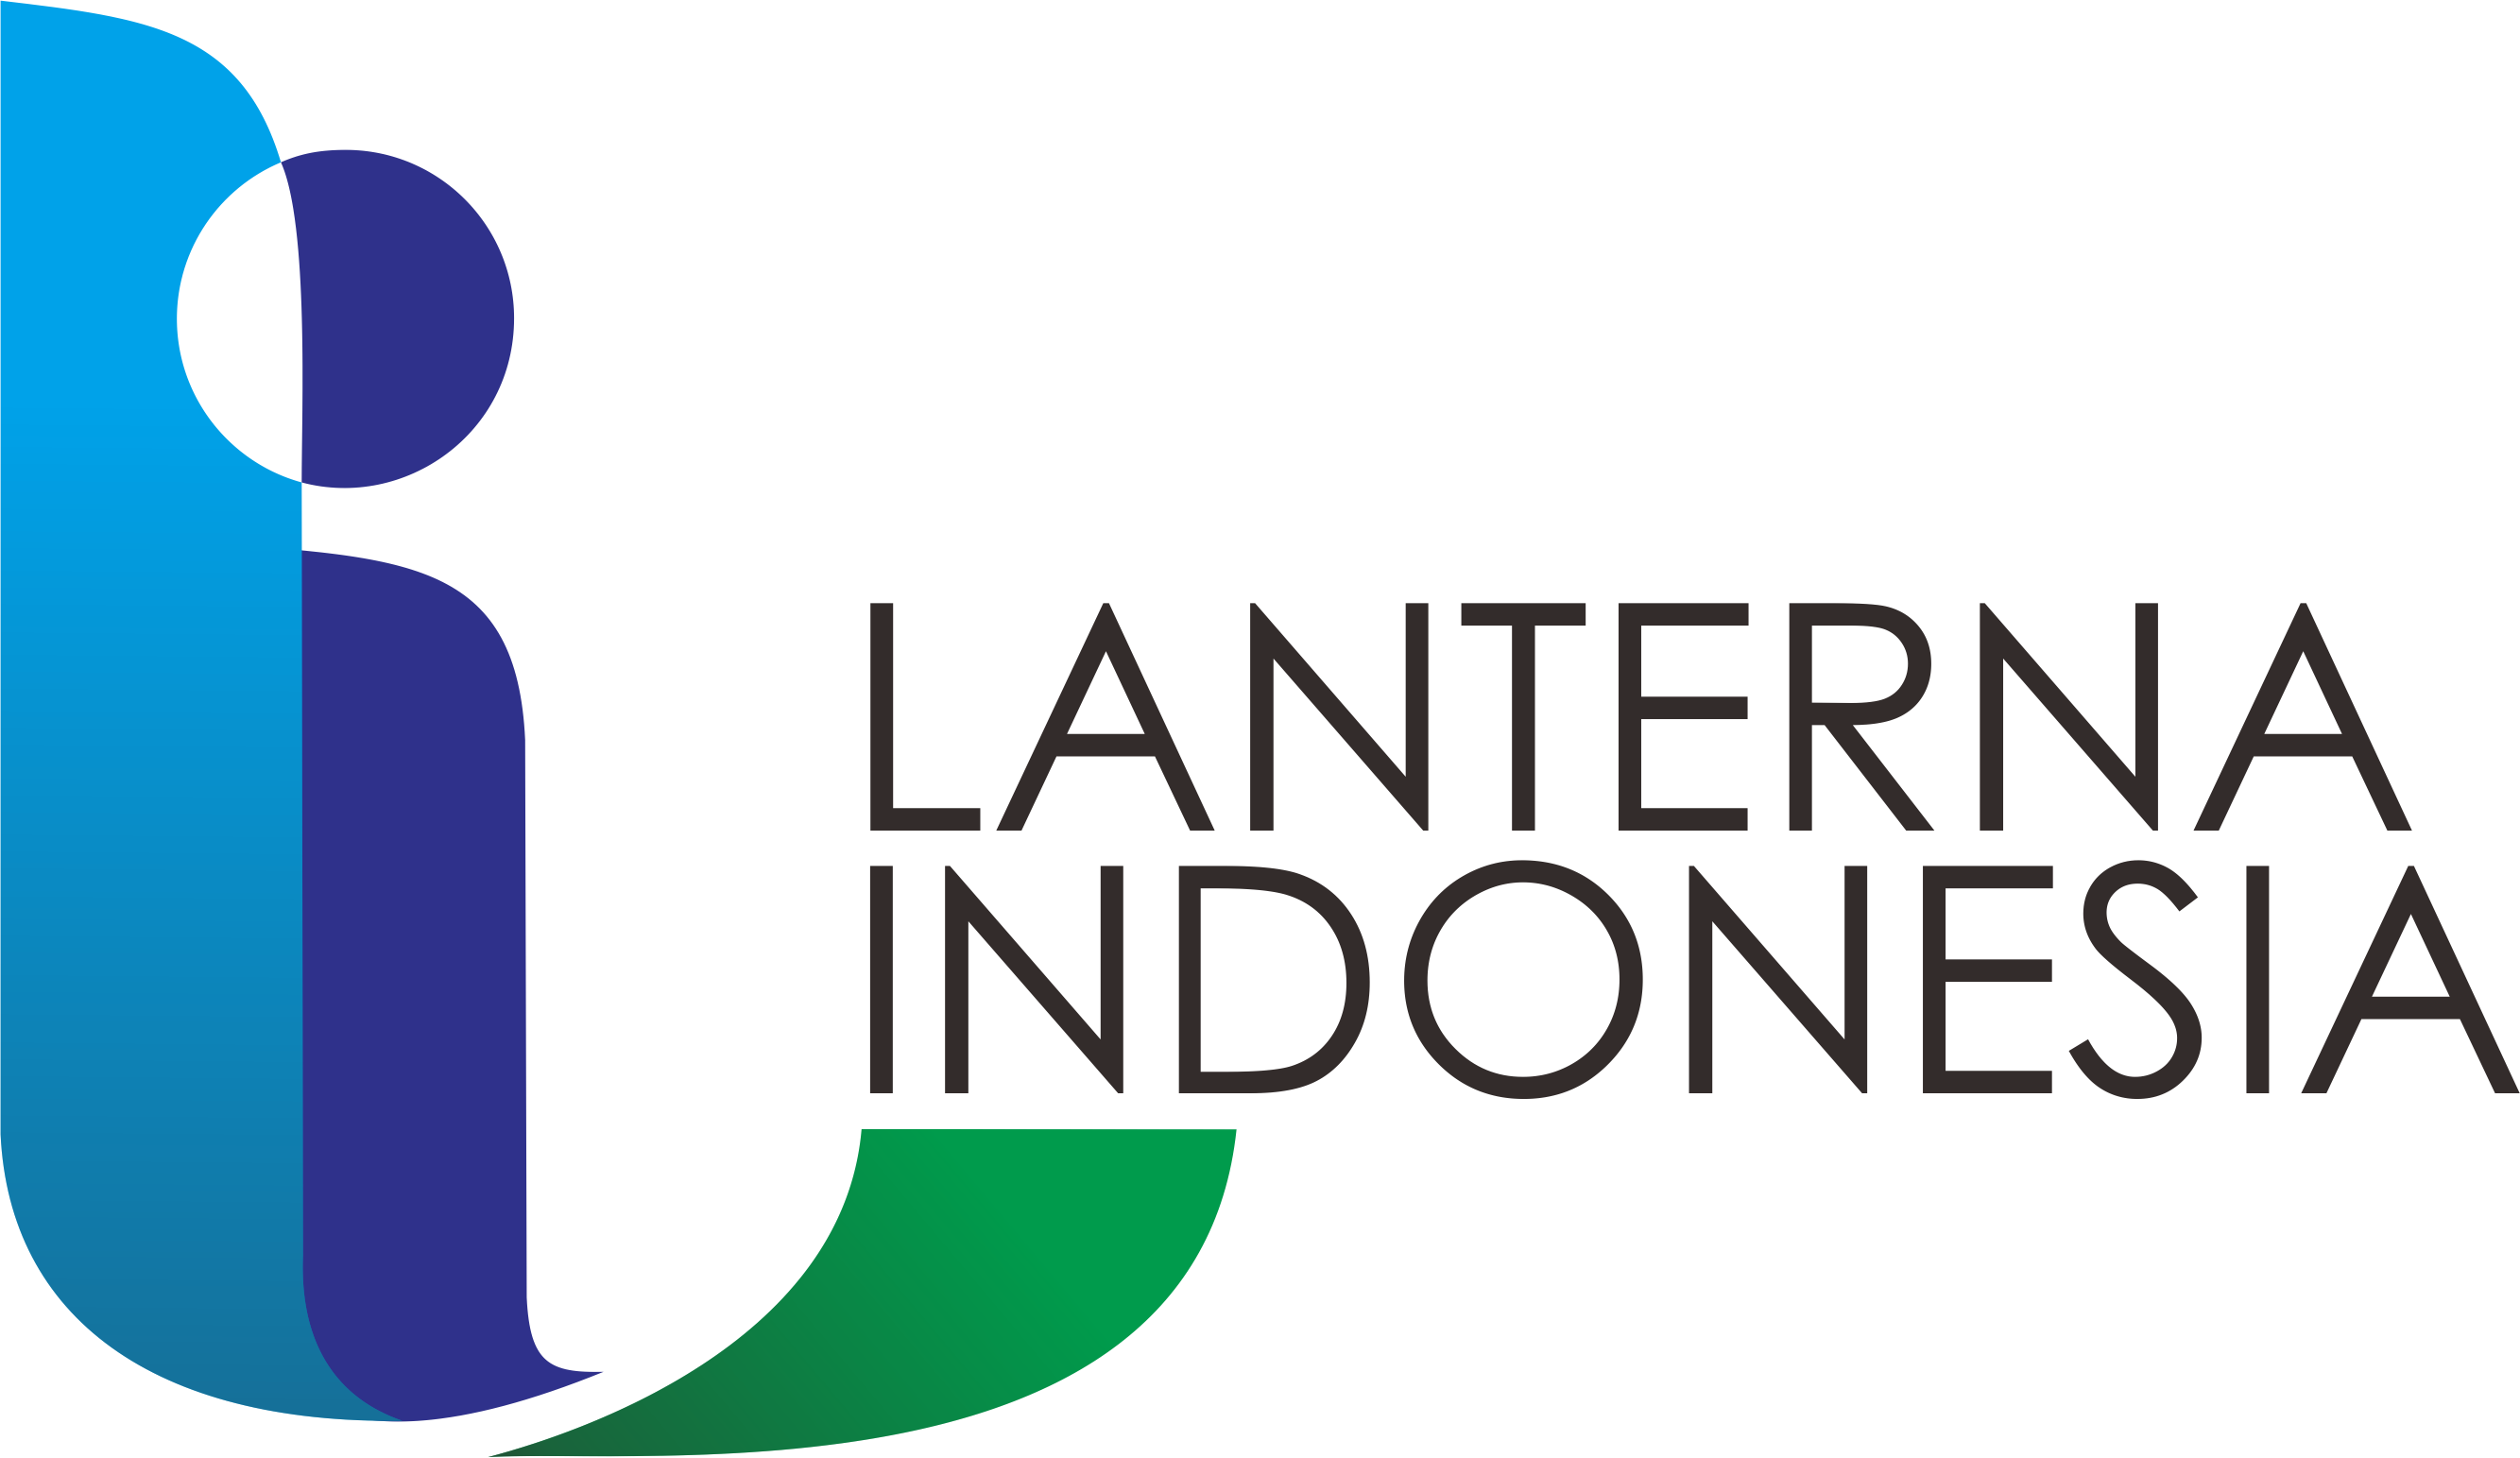 Lanterna Indonesia